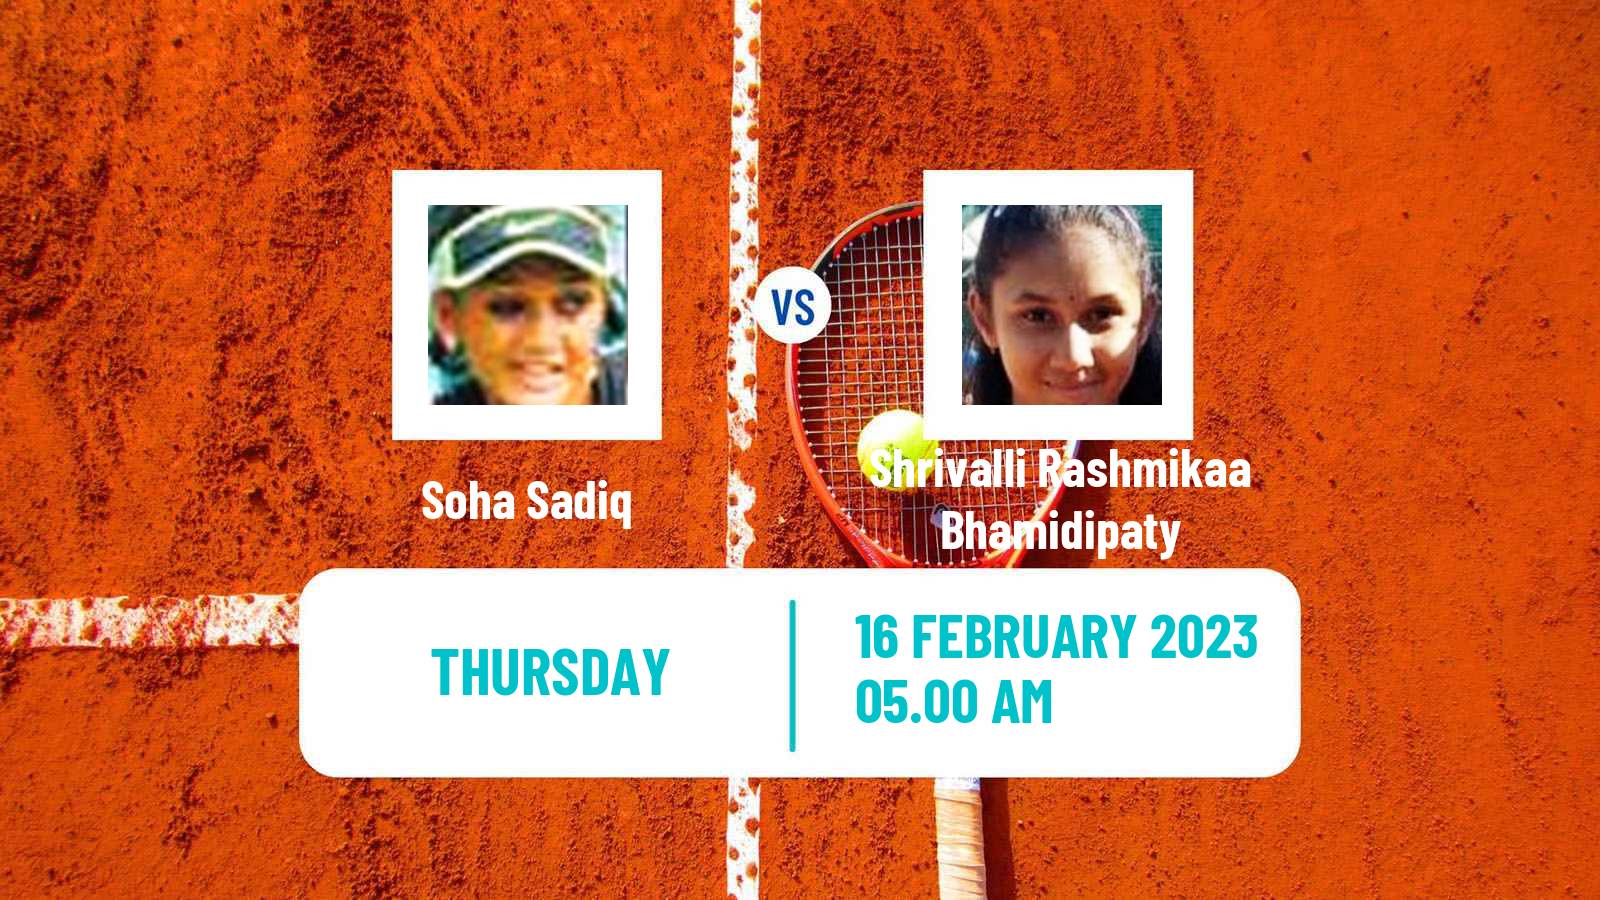 Tennis ITF Tournaments Soha Sadiq - Shrivalli Rashmikaa Bhamidipaty